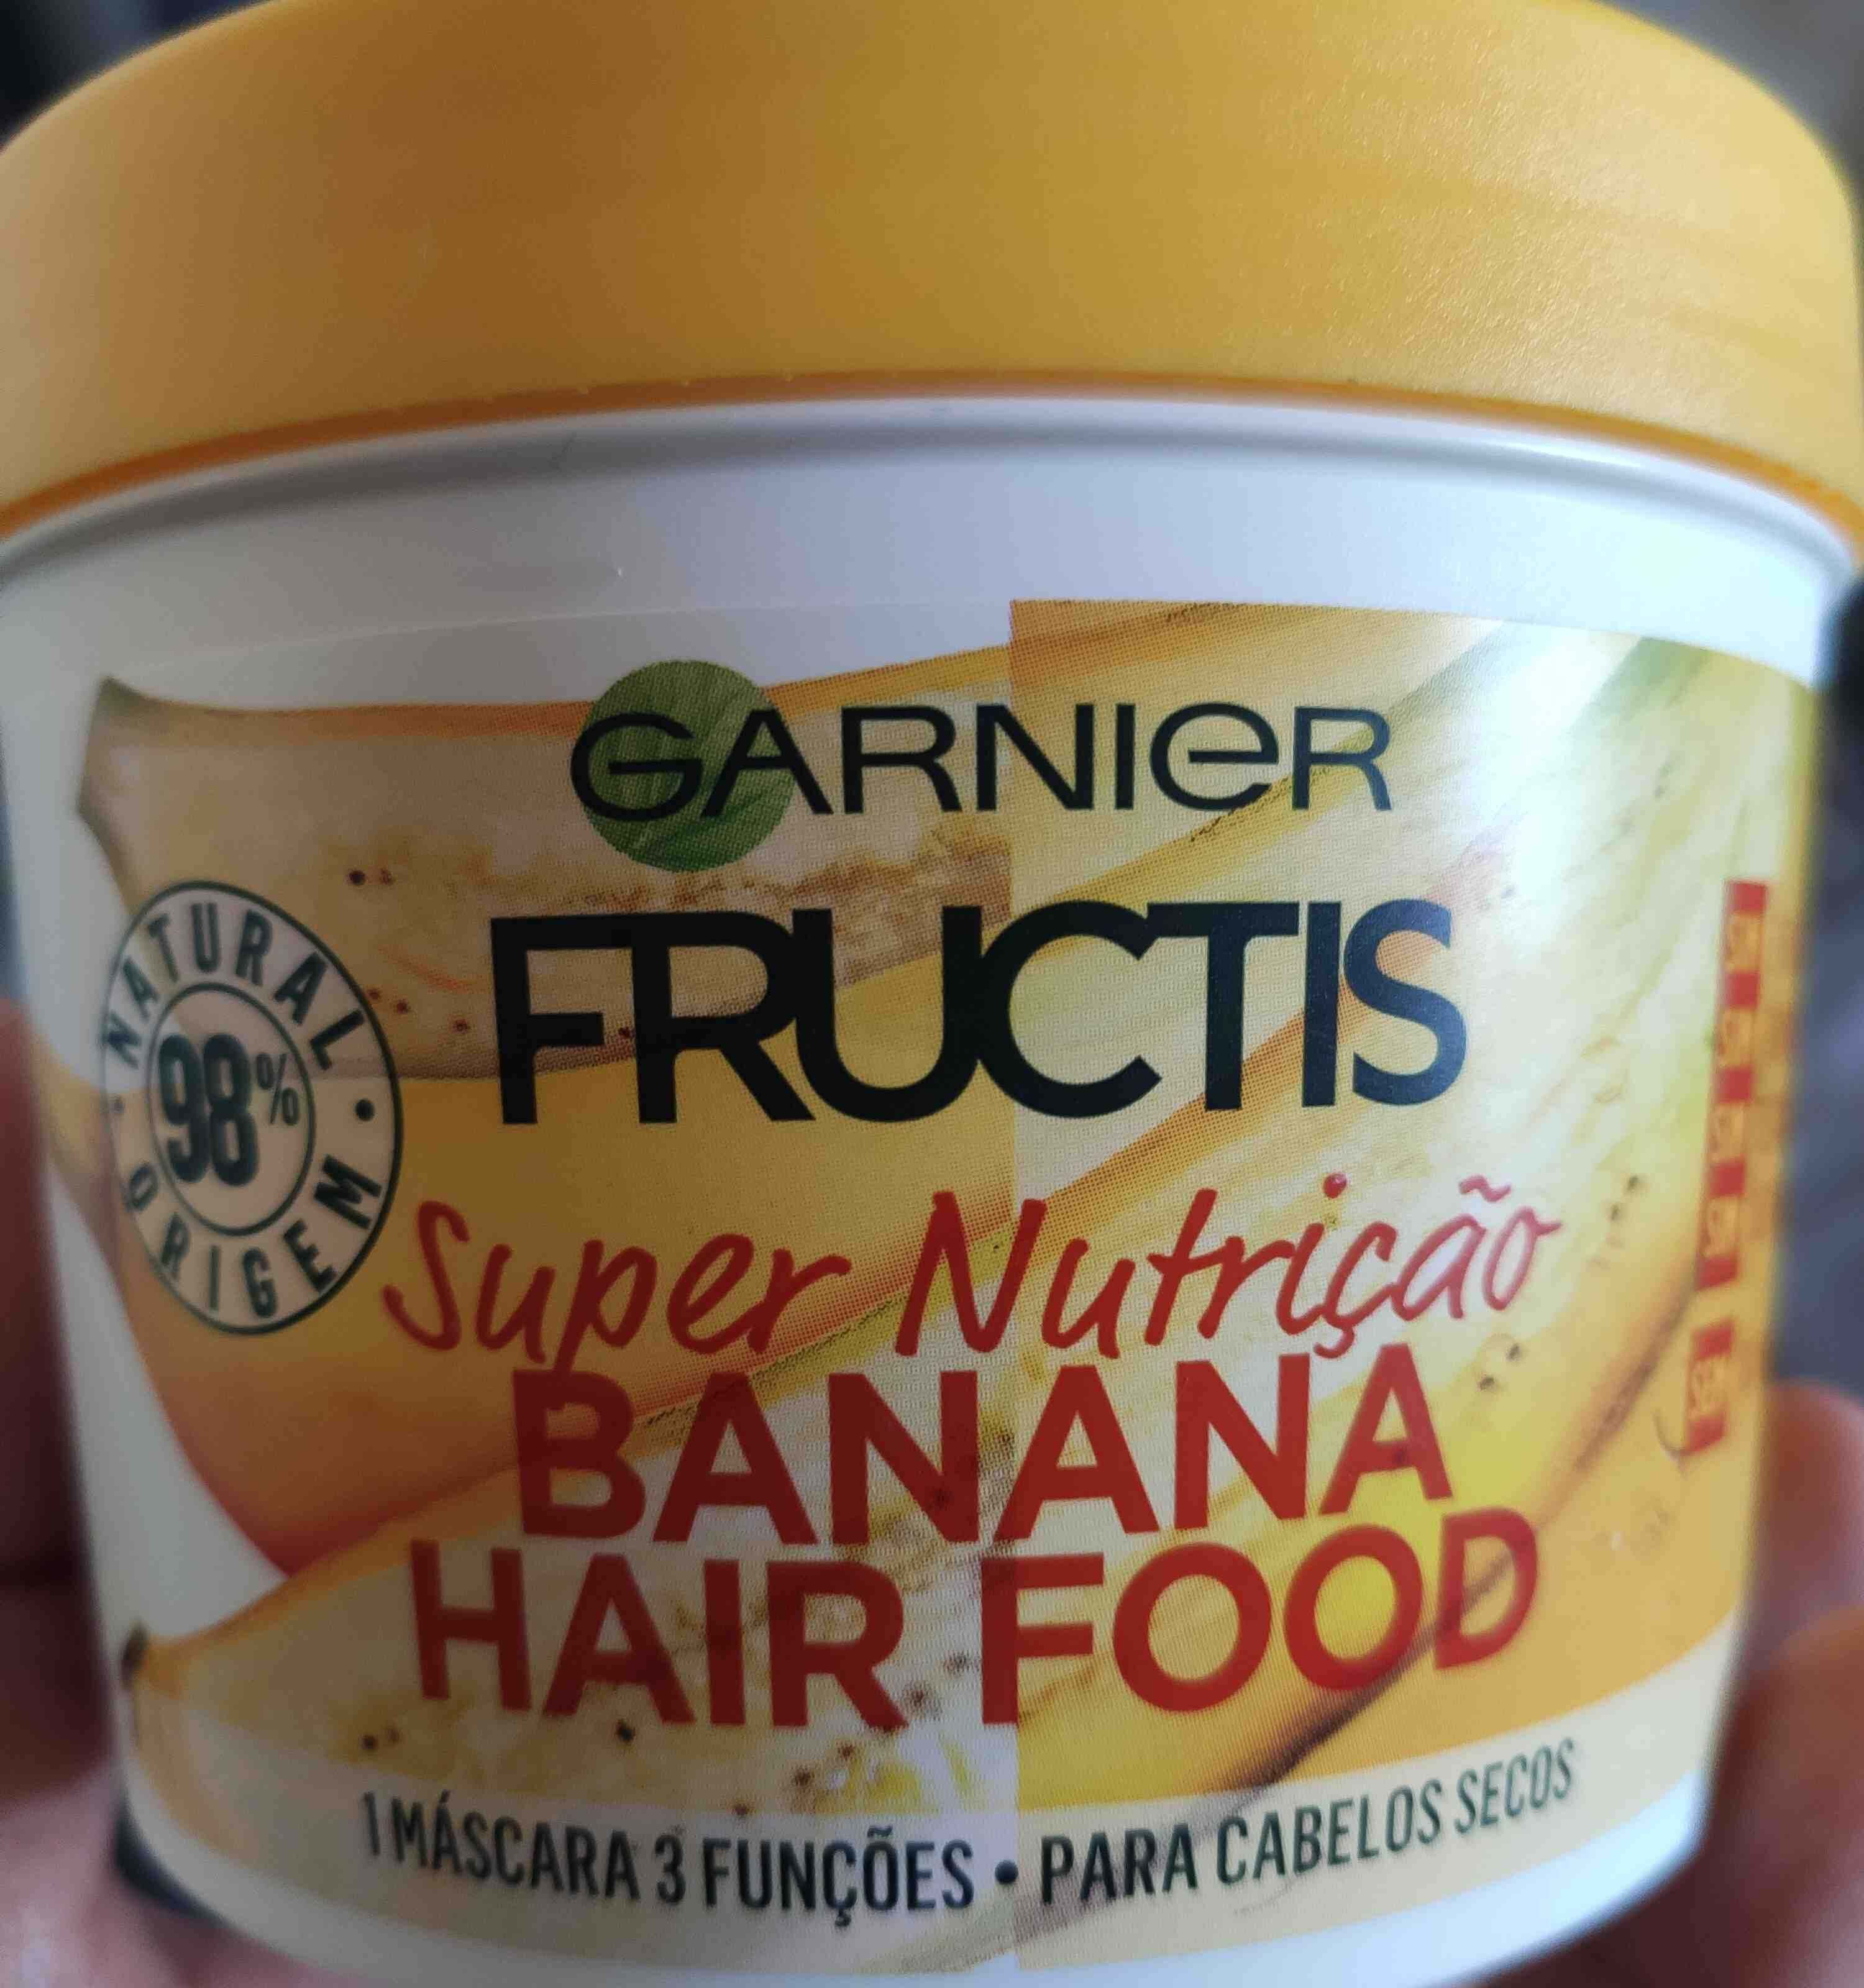 Garnier fructis banana hair food -